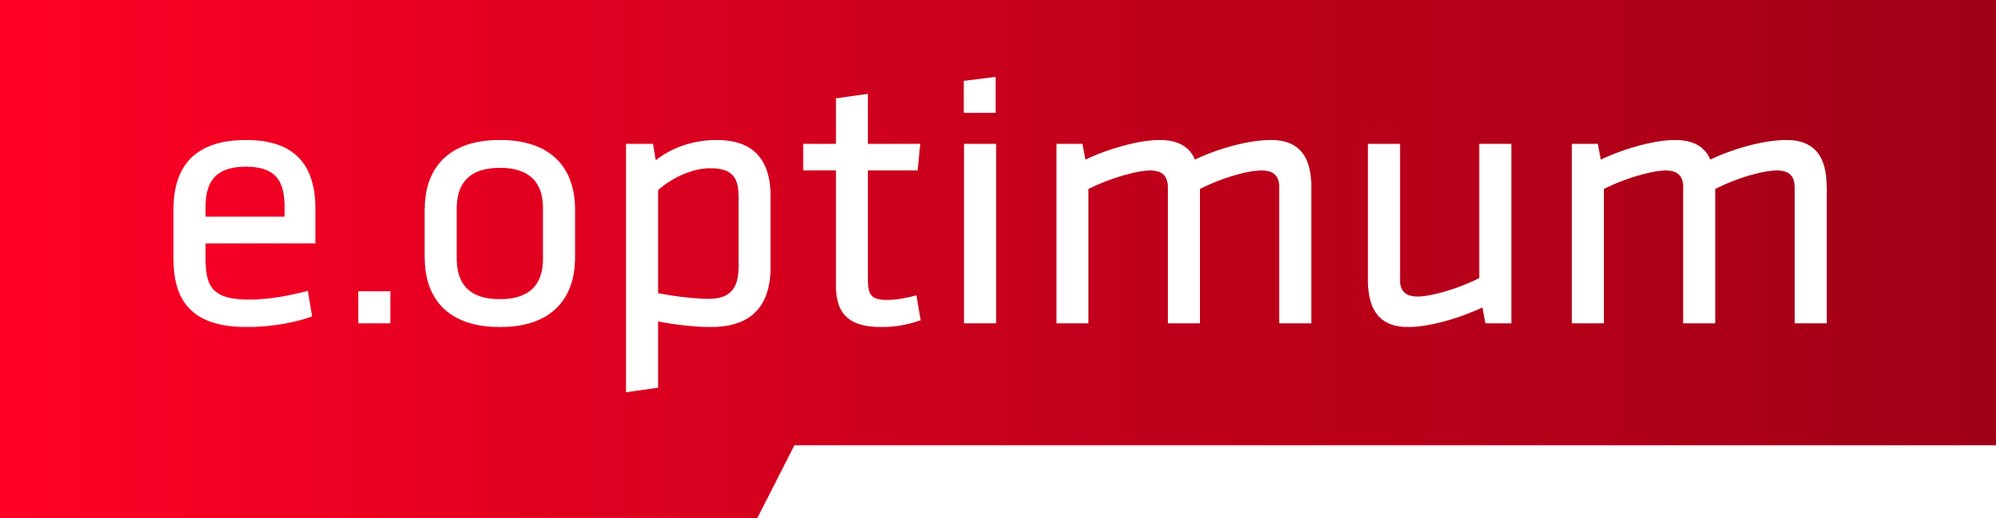 e.optimum Logo 